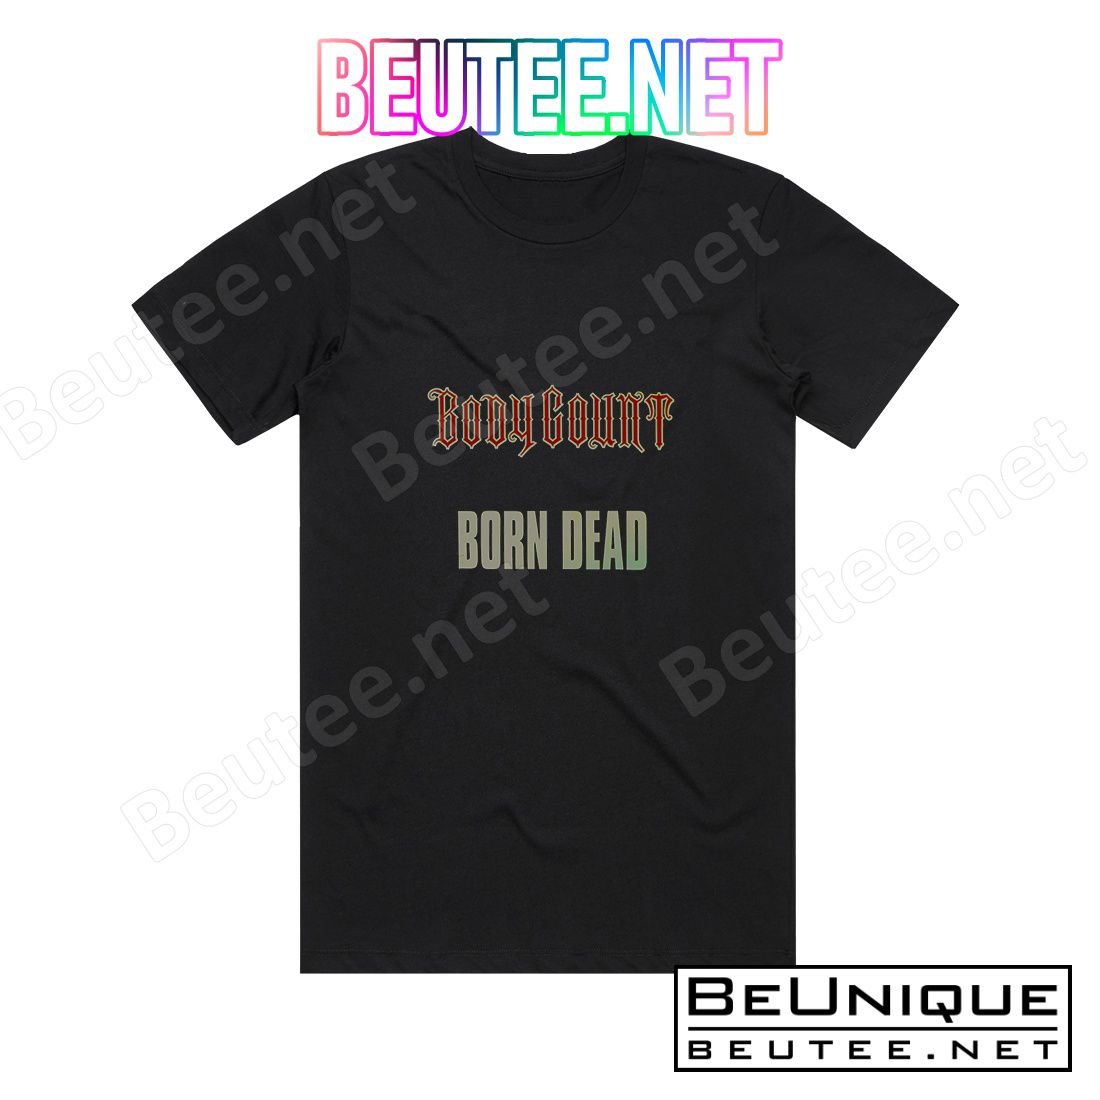 Body Count Born Dead 2 Album Cover T-Shirt